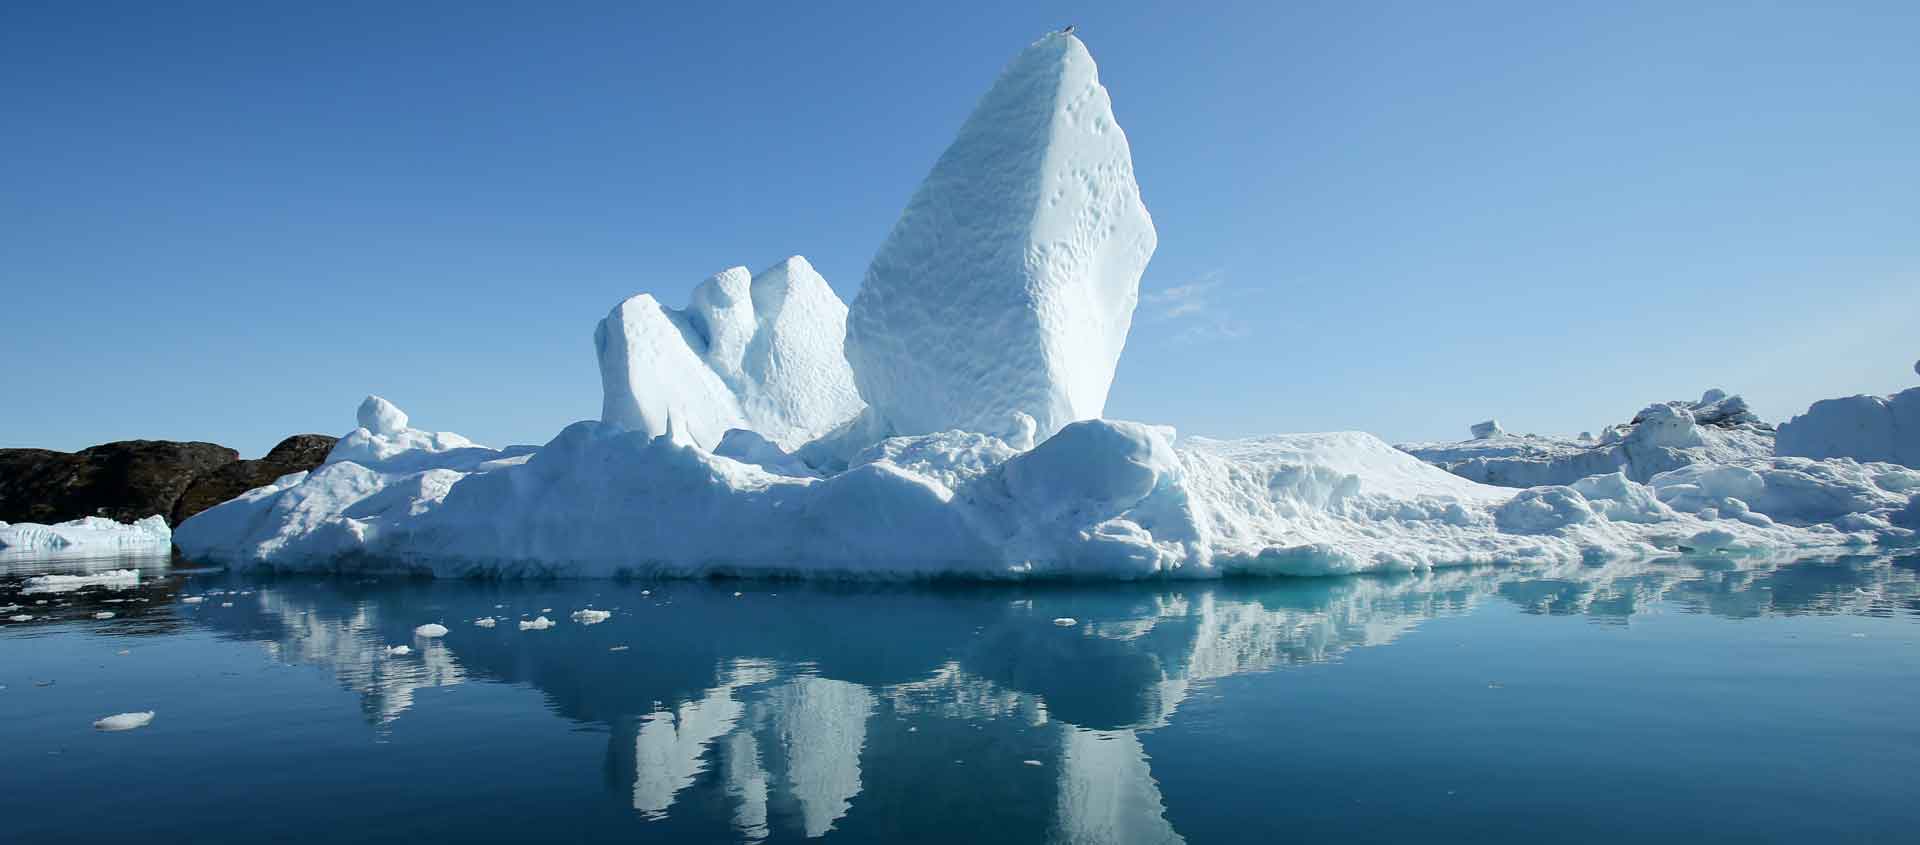 Baffin Island and Greenland photo of icebergs near Ilulissat